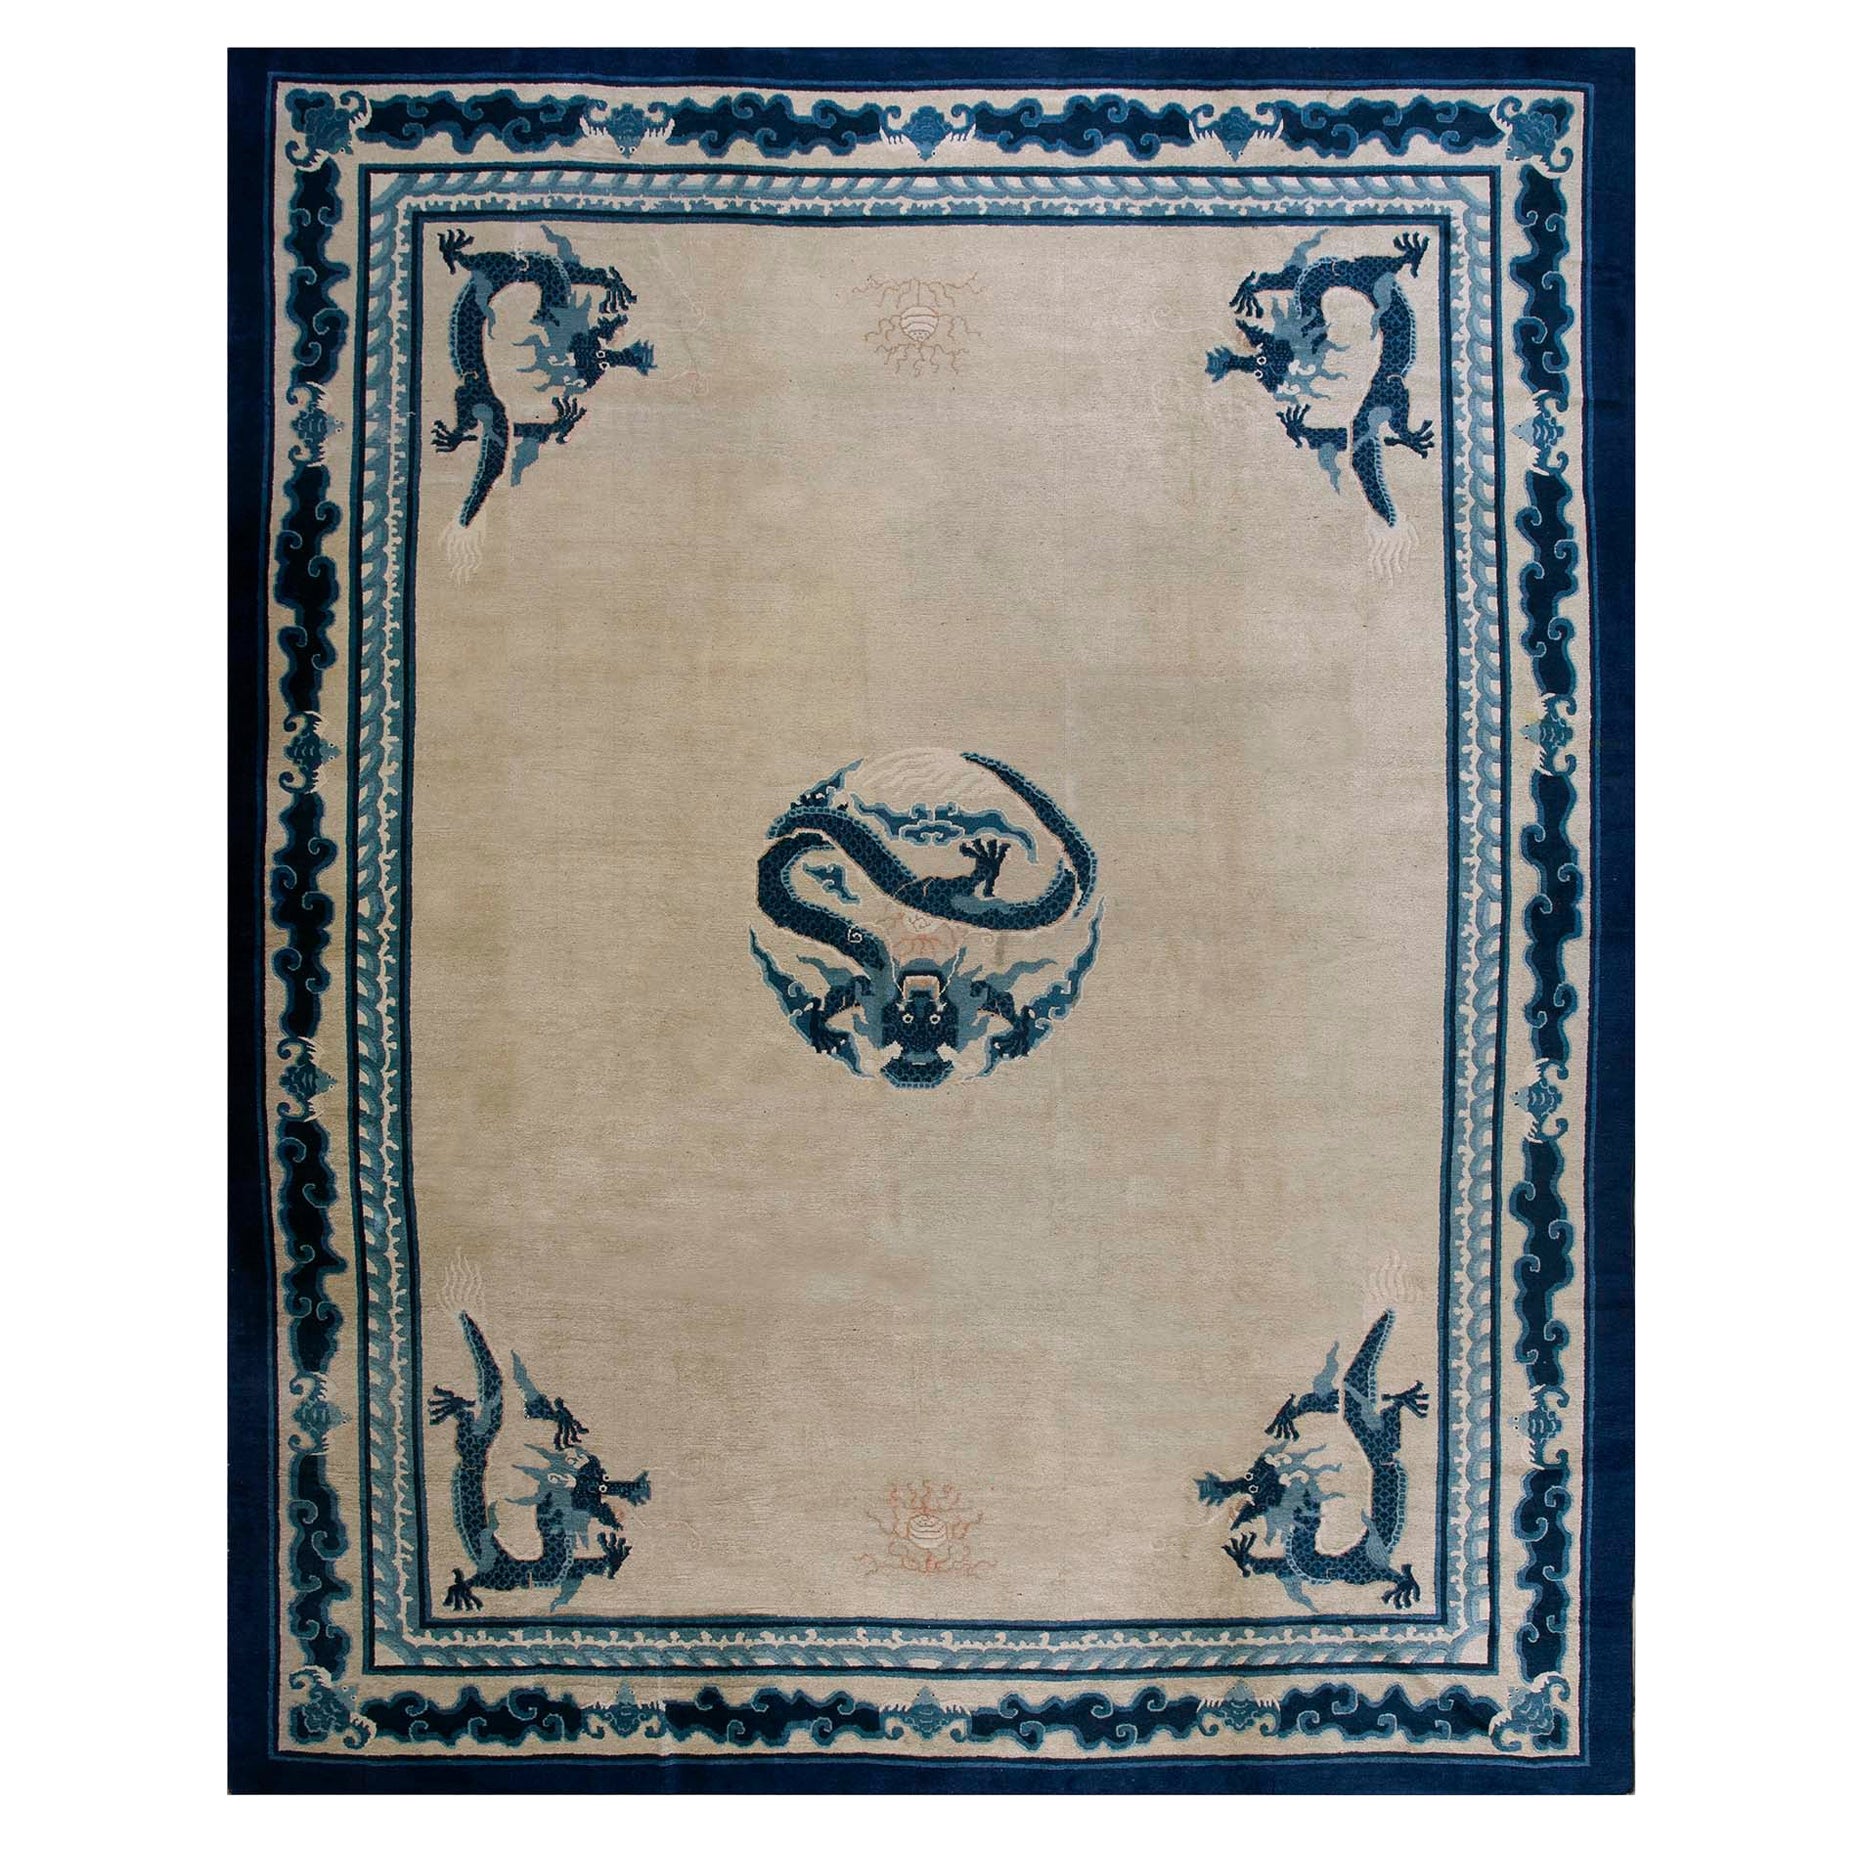 Late 19th Century Chinese Peking Dragon Carpet ( 10'2" x 12'8" - 310 x 385 )